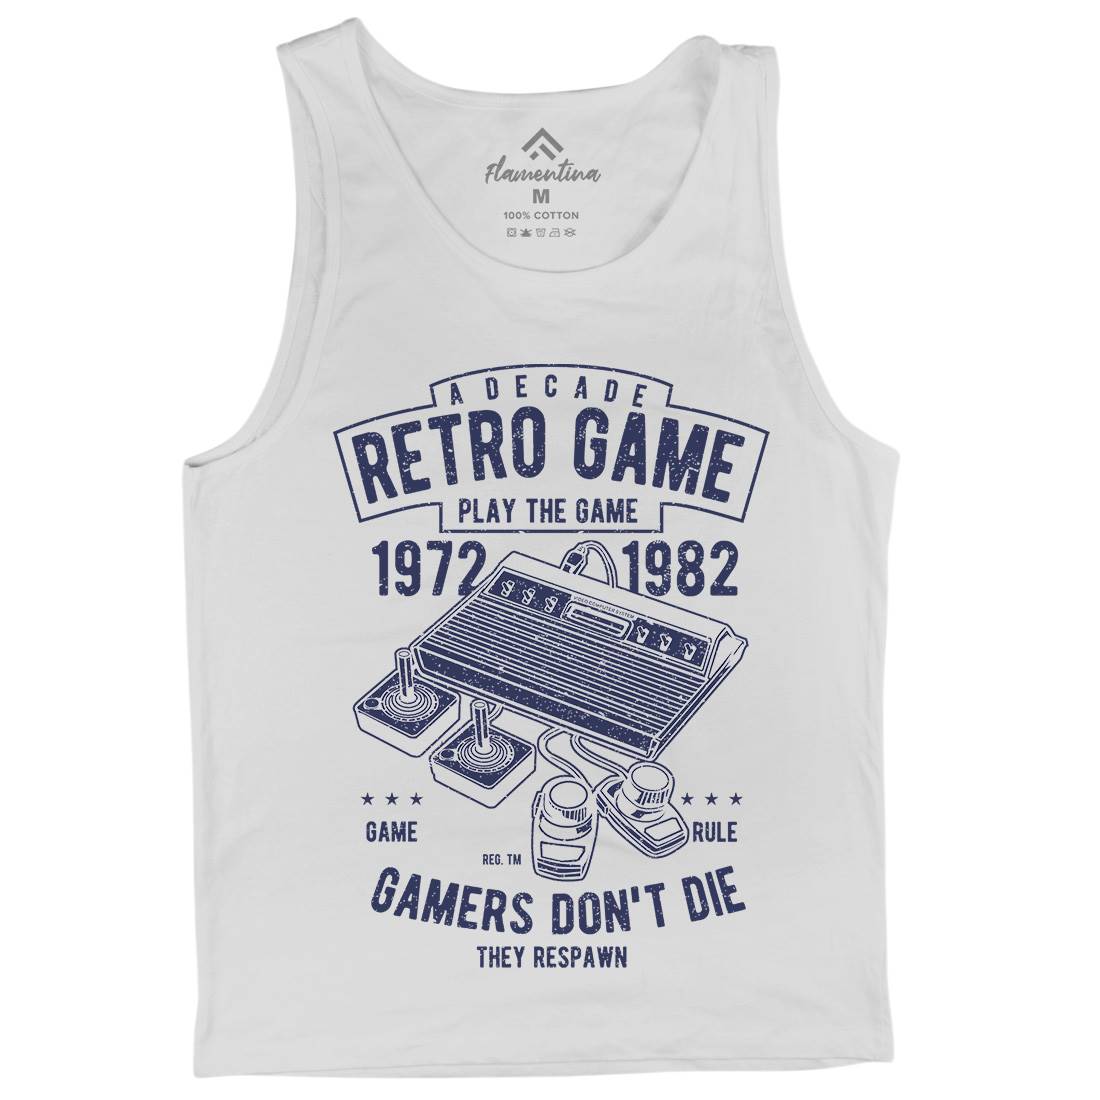 Retro Game Club Mens Tank Top Vest Geek A741